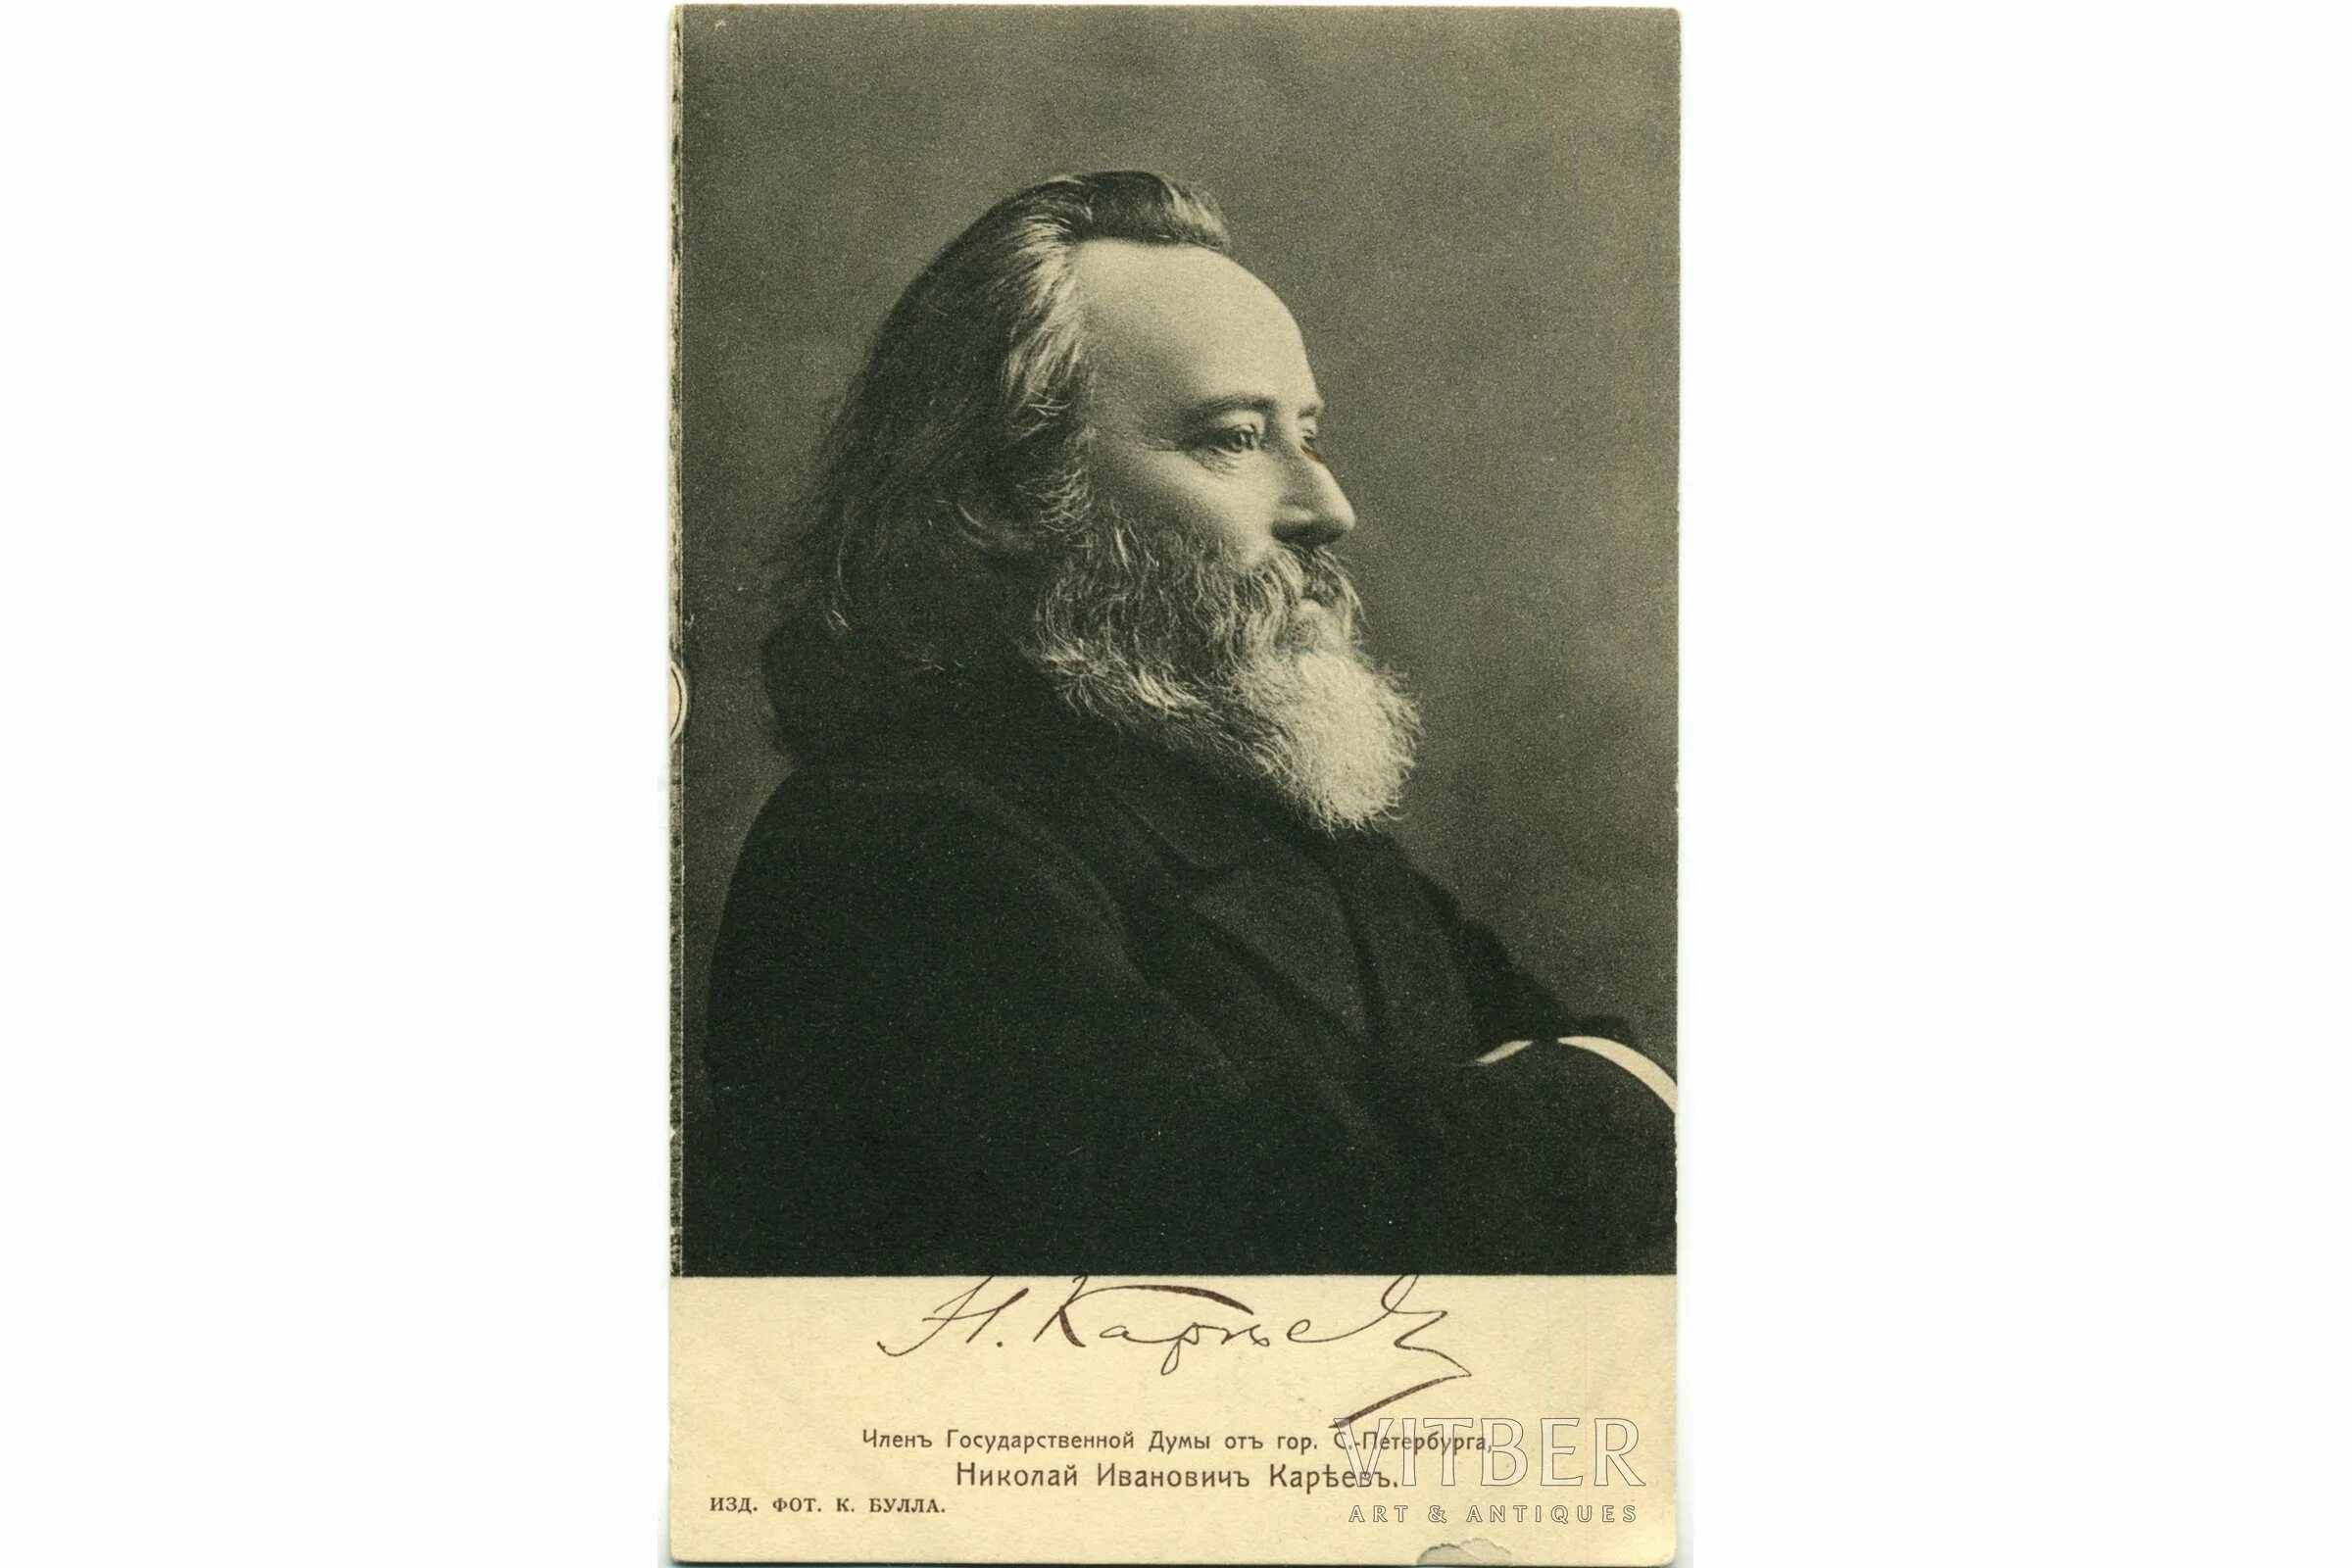 Н и кареев. Н И Кареев историк. ), Н.И. Кареев (1850-1931)..